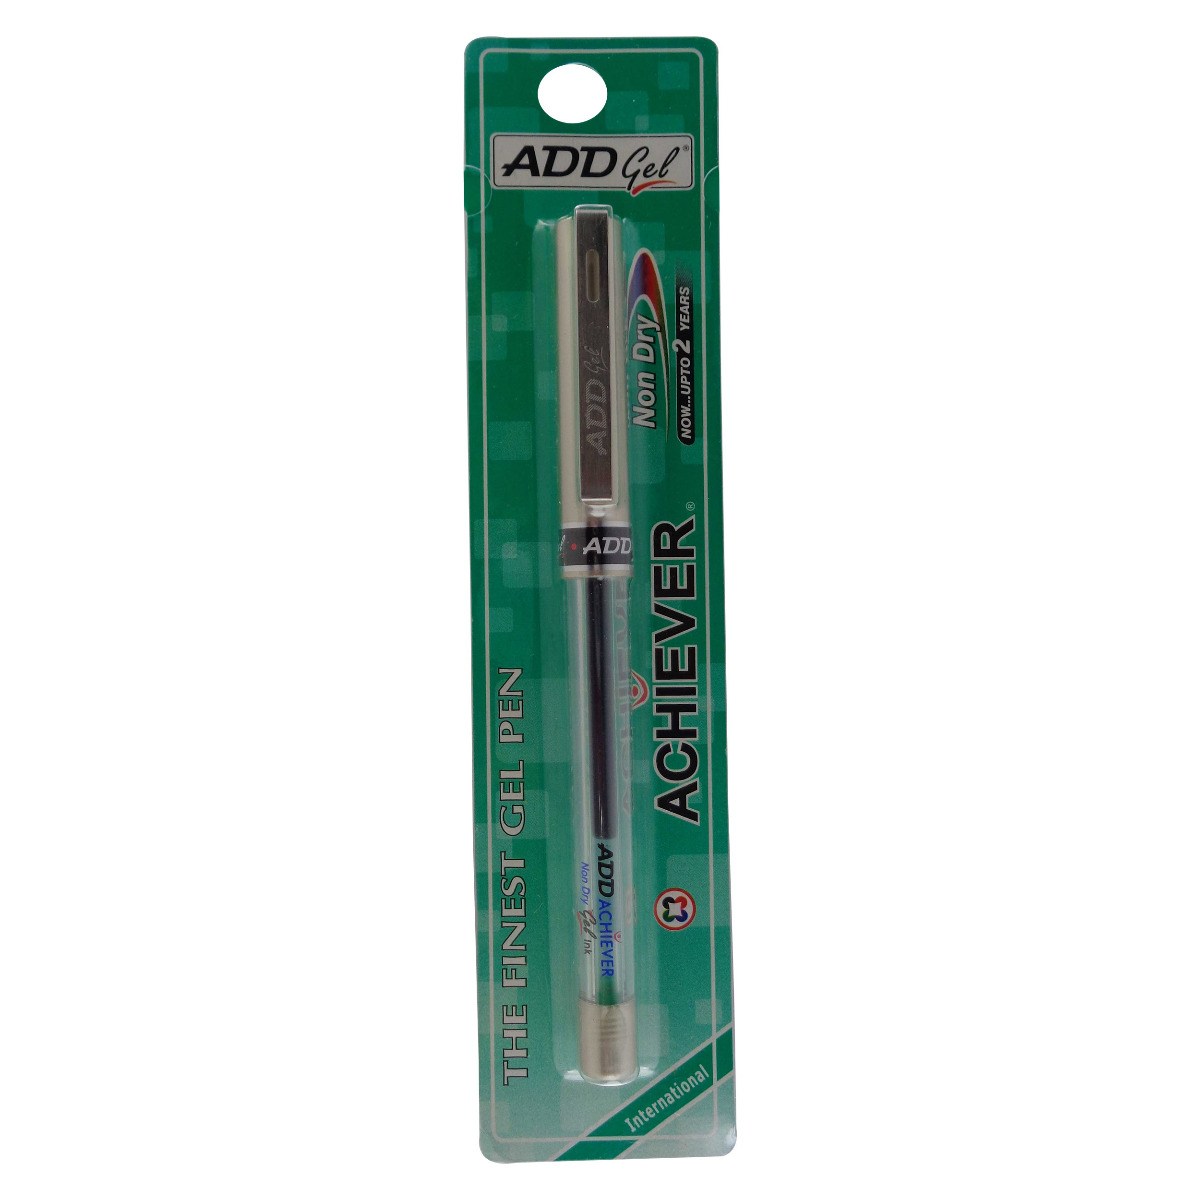 Add gel Achiever- Green color Transparent body cap type gel Pen Model: 13530